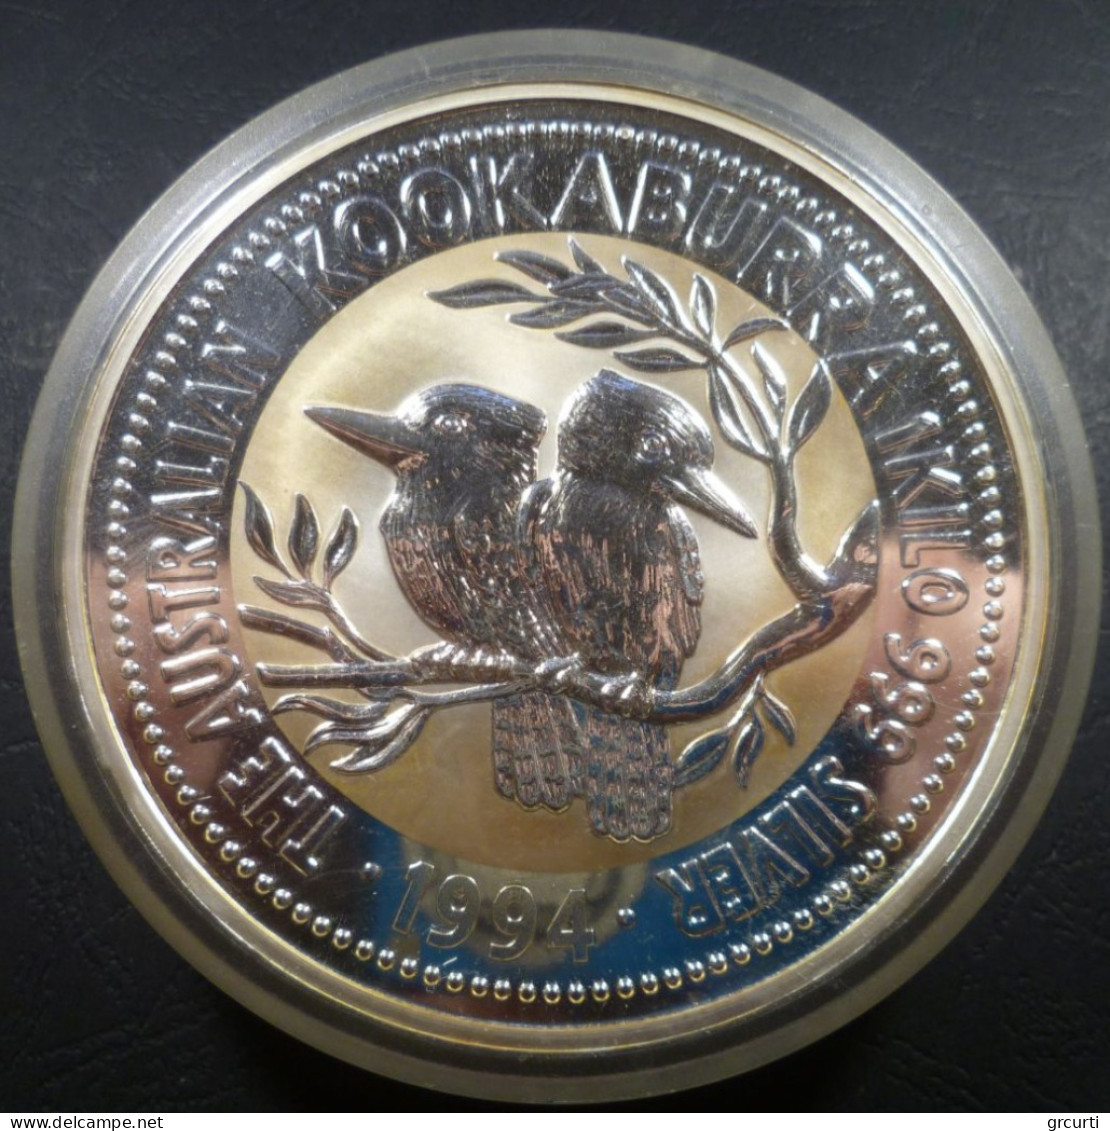 Australia - 30 Dollari 1994 - Kookaburra - KM# 232 - Silver Bullions